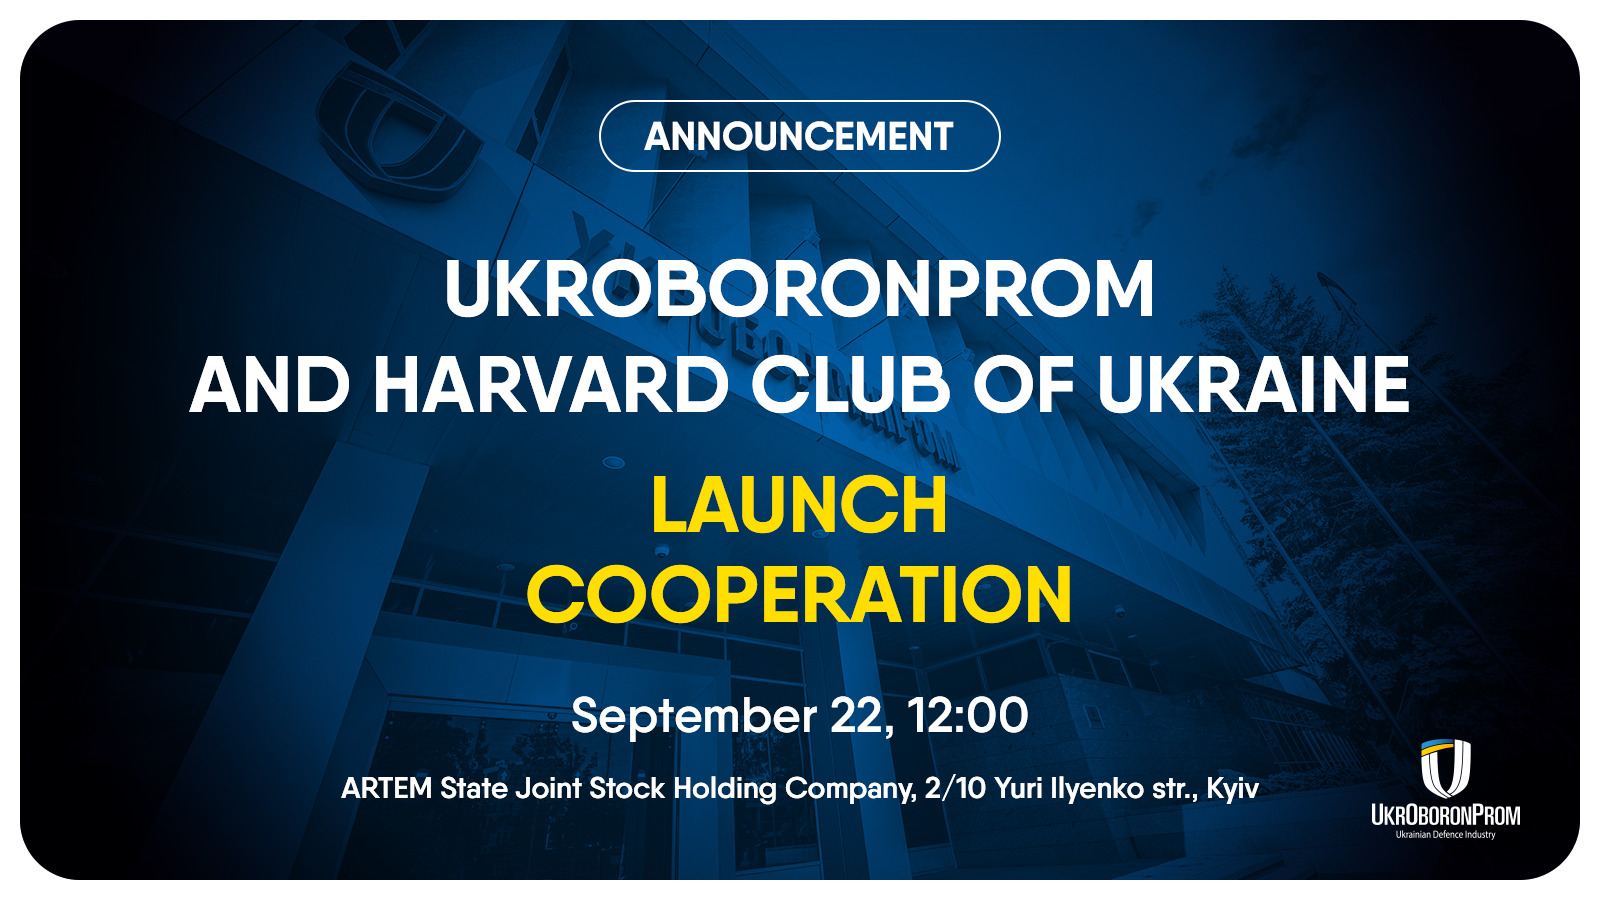 Ukroboronprom and Harvard Club of Ukraine launch cooperation